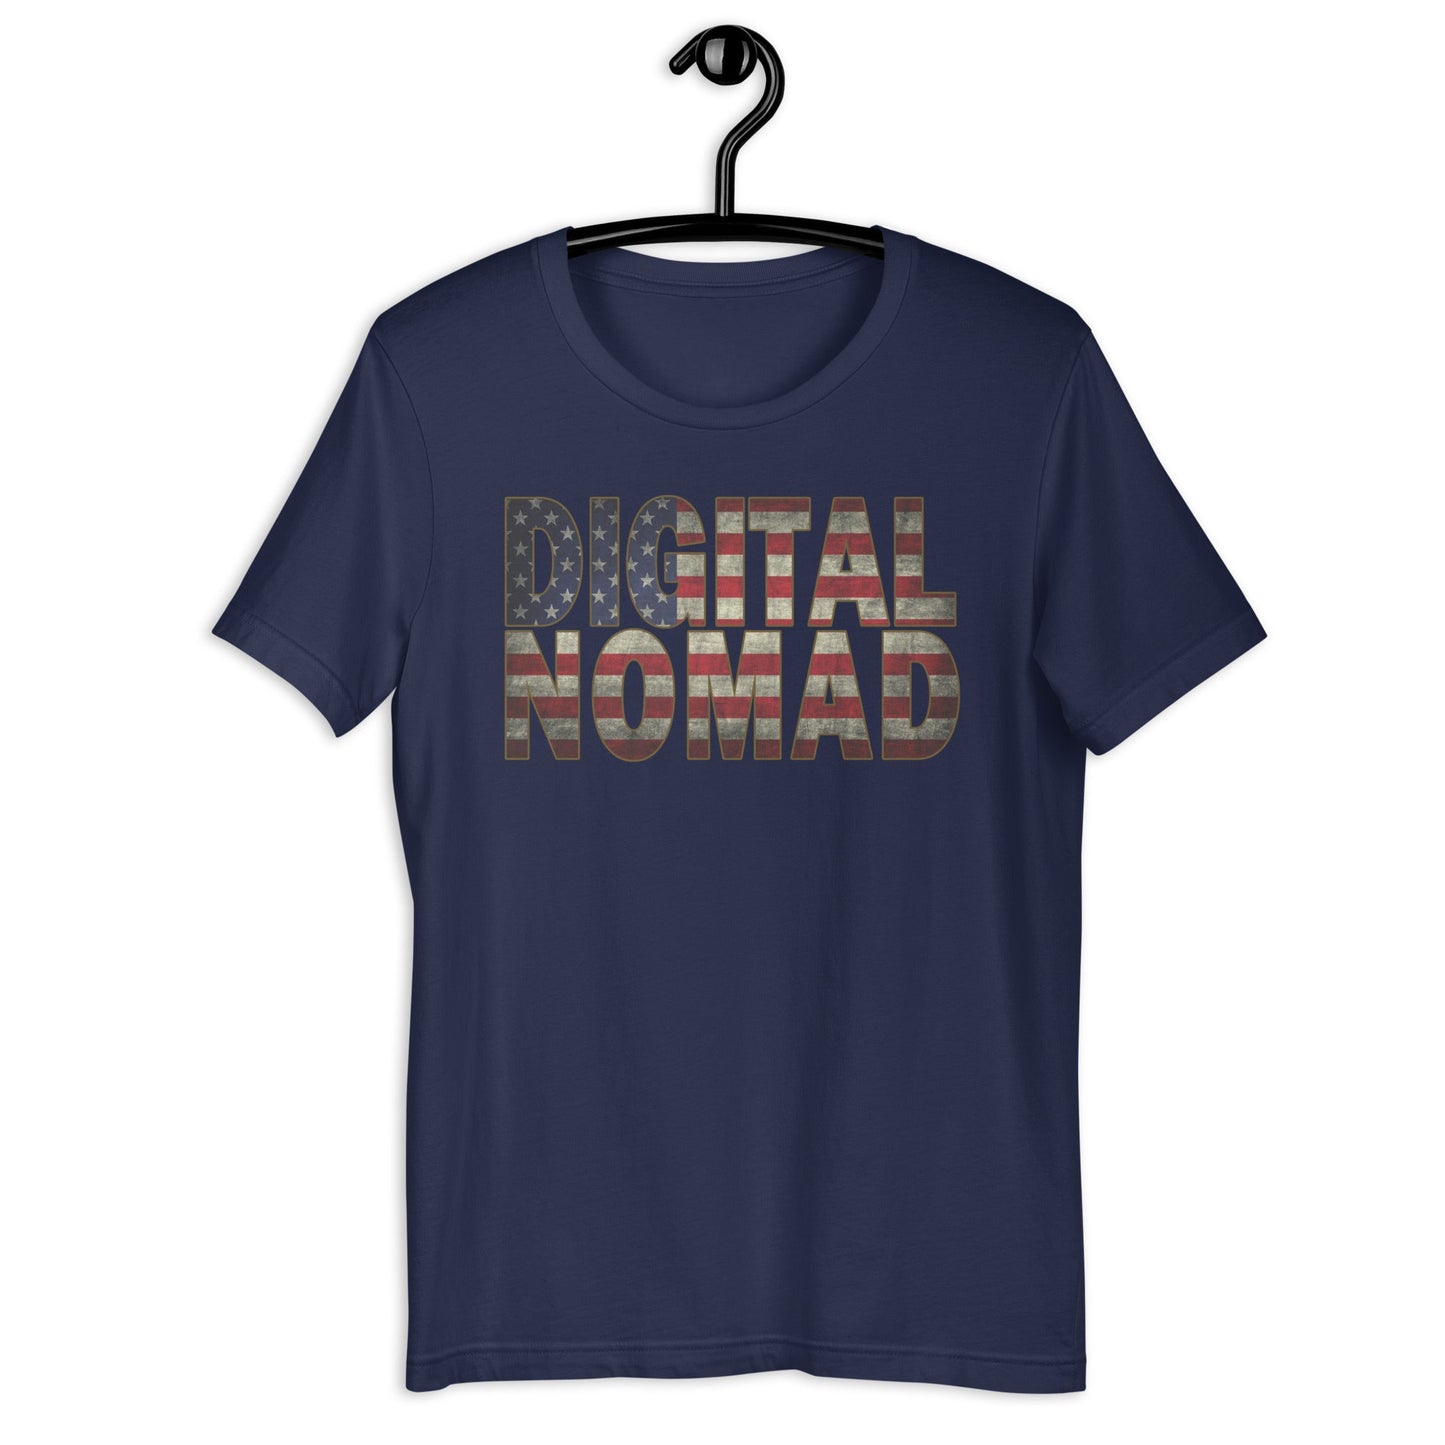 Digital Nomad T-Shirt